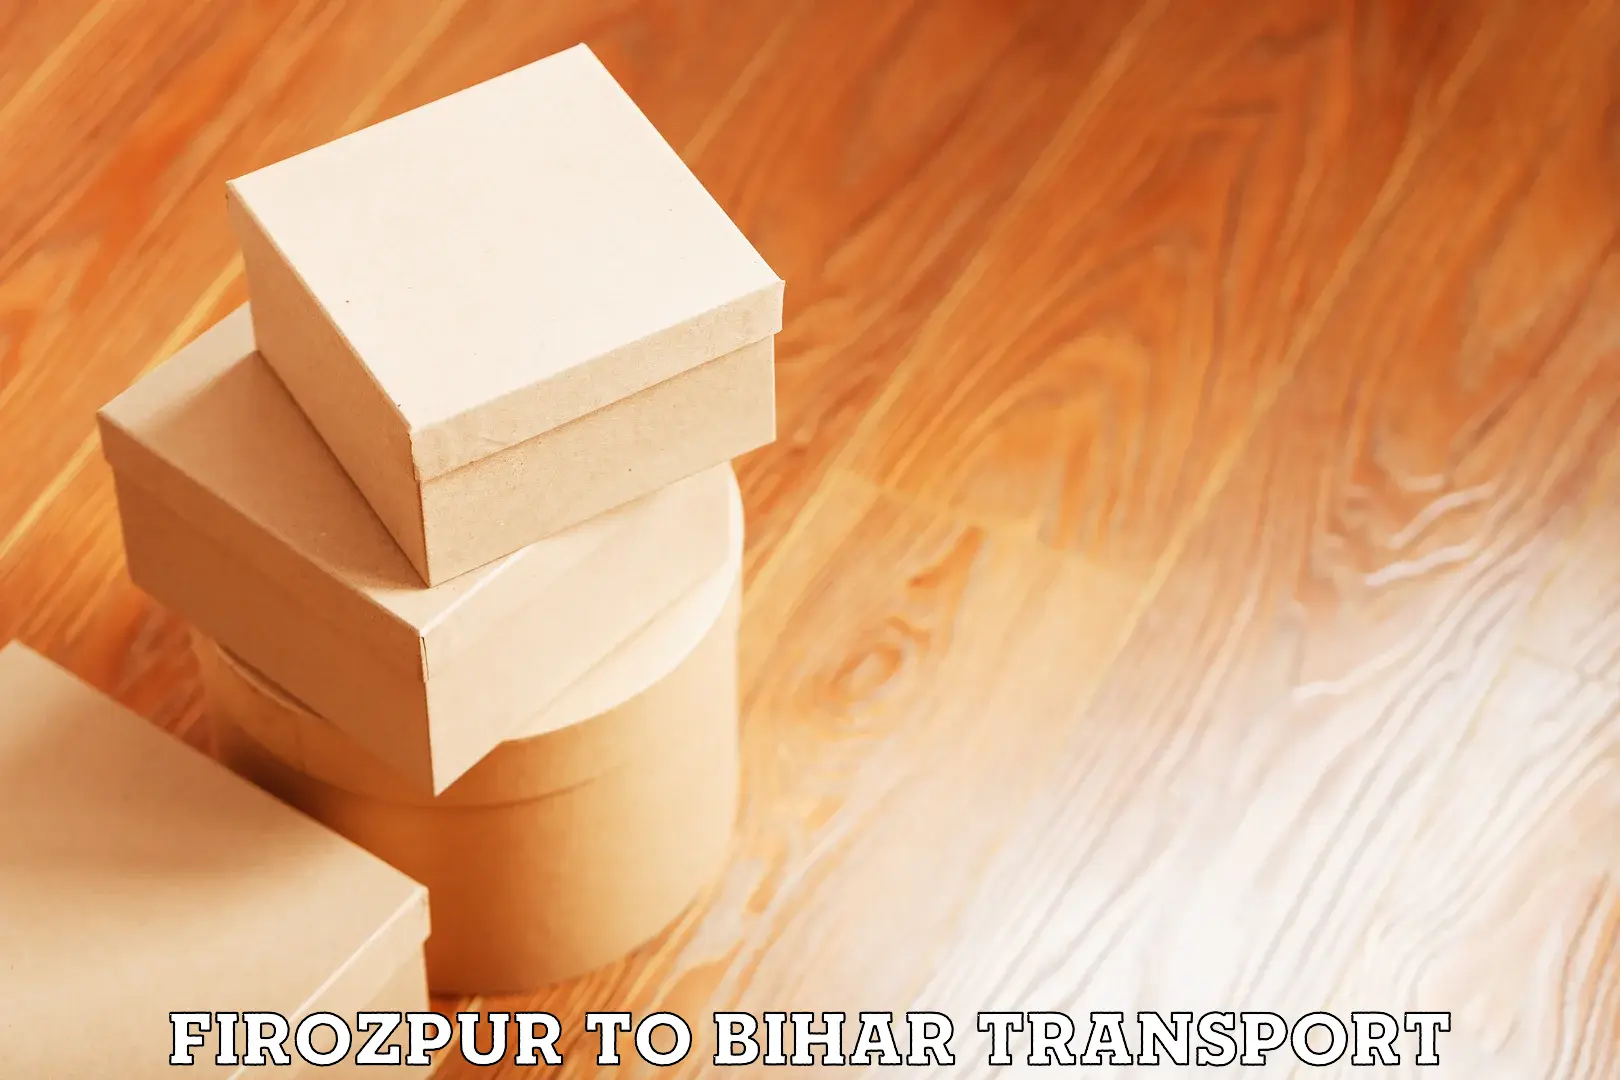 Bike shipping service Firozpur to Minapur